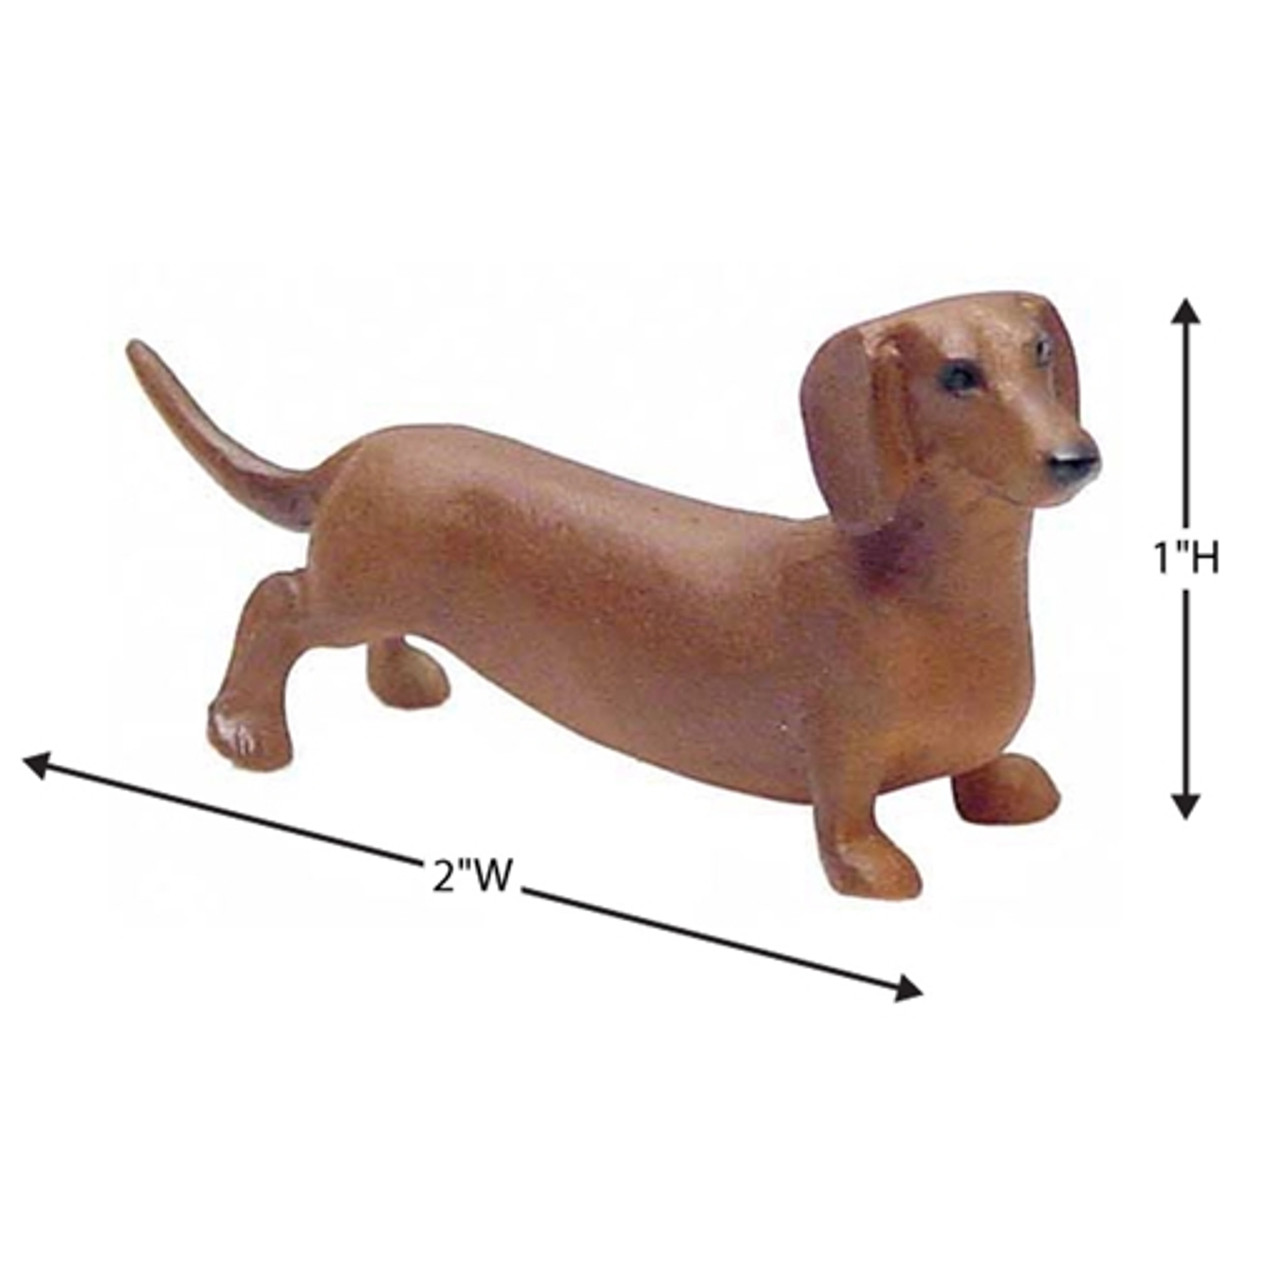 Wiener Dog Building Kit